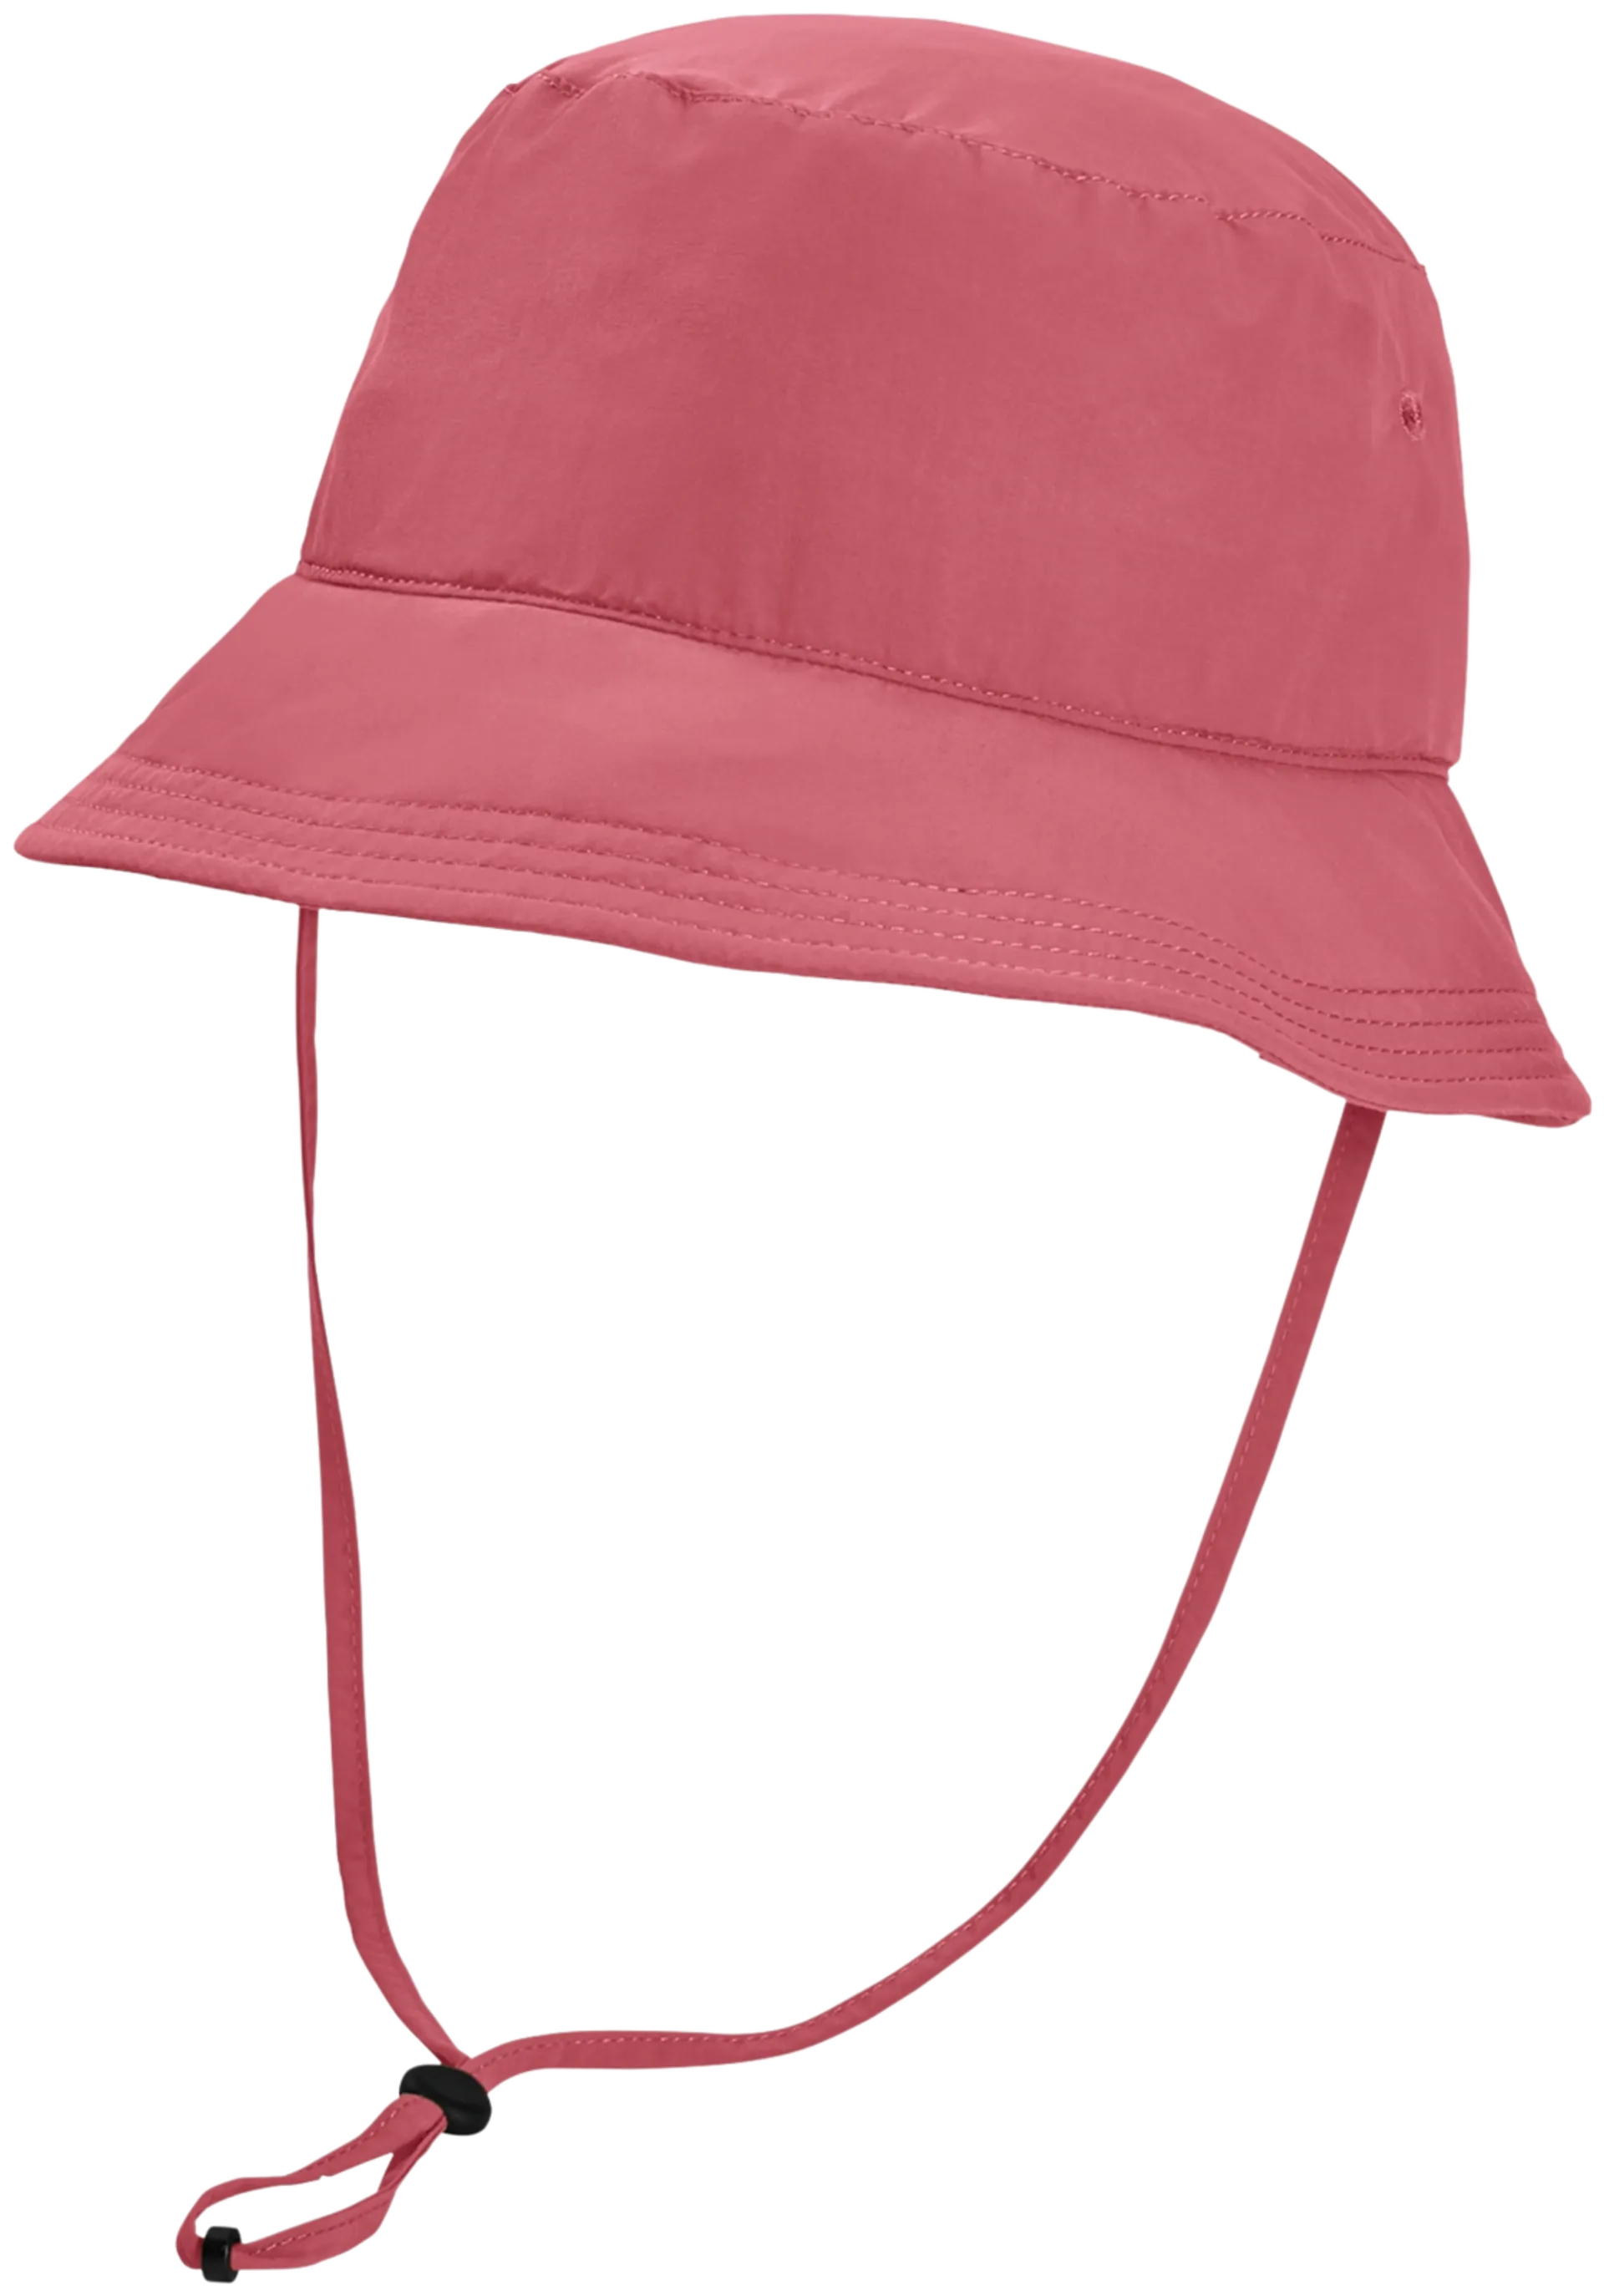 Jack Wolfskin lierihattu Sun Hat - Soft pink